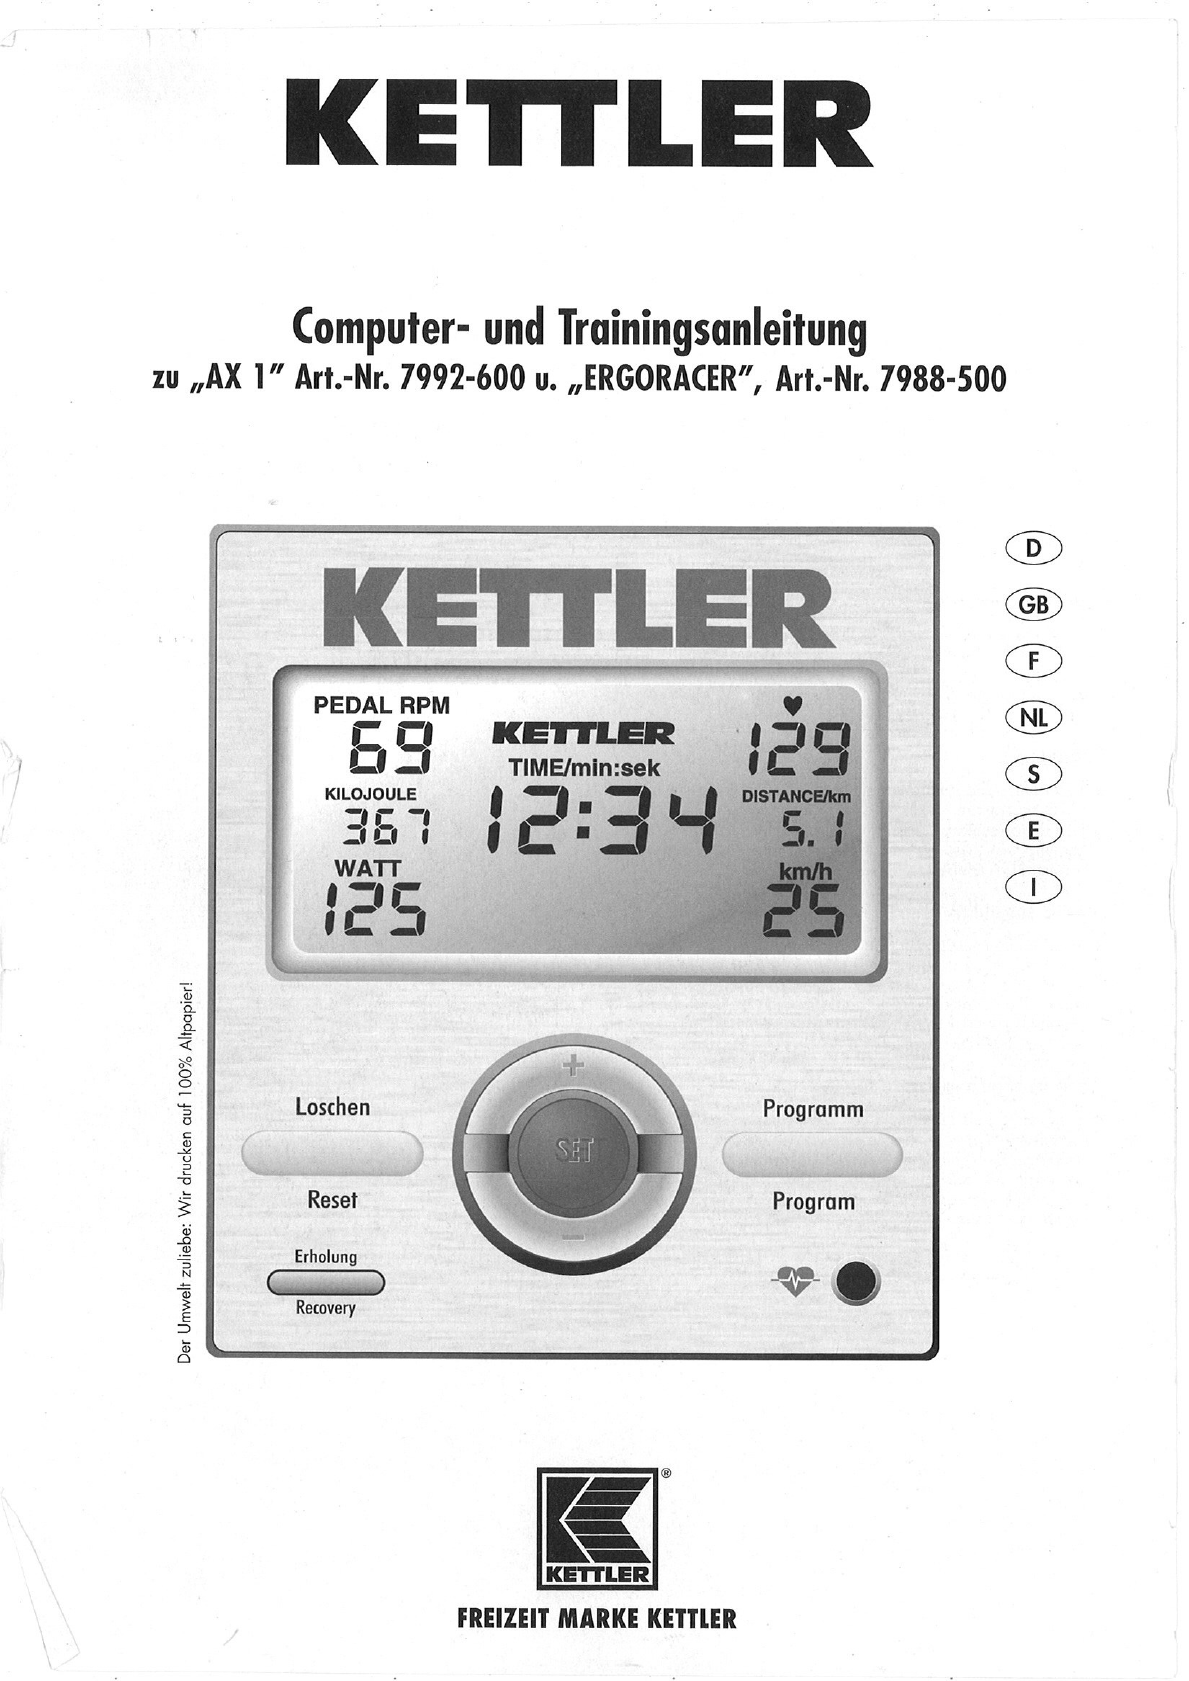 Handleiding Kettler Ergometer AX 1 7992-600 (pagina van 20) (Nederlands, Duits, Engels, Frans, Italiaans, Portugees, Spaans, Zweeds)